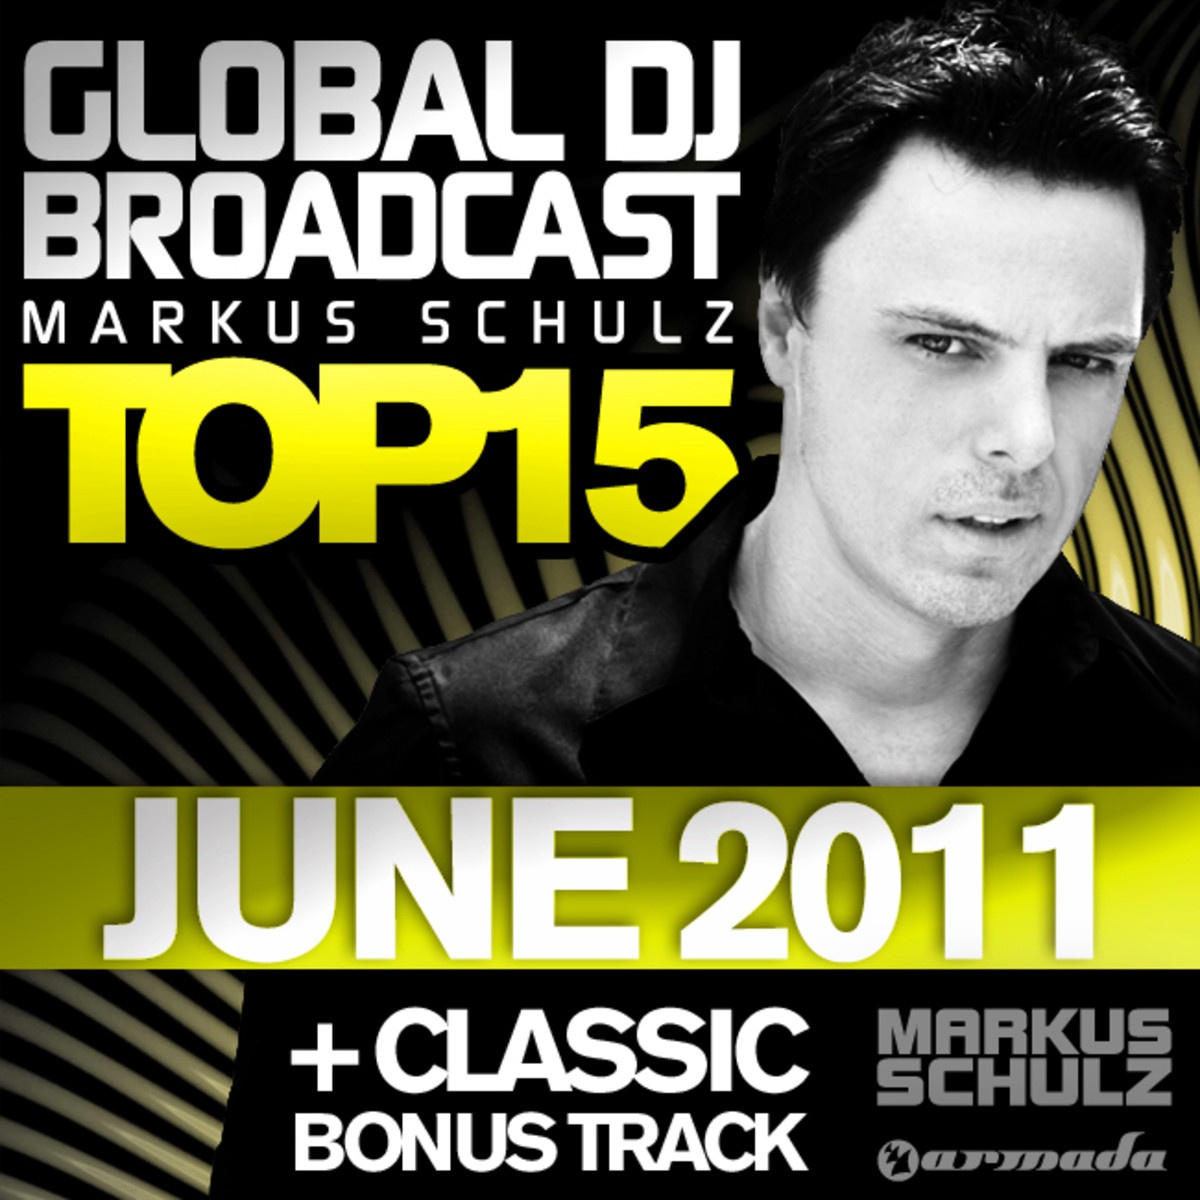 Global DJ Broadcast Top 15 - June 2011